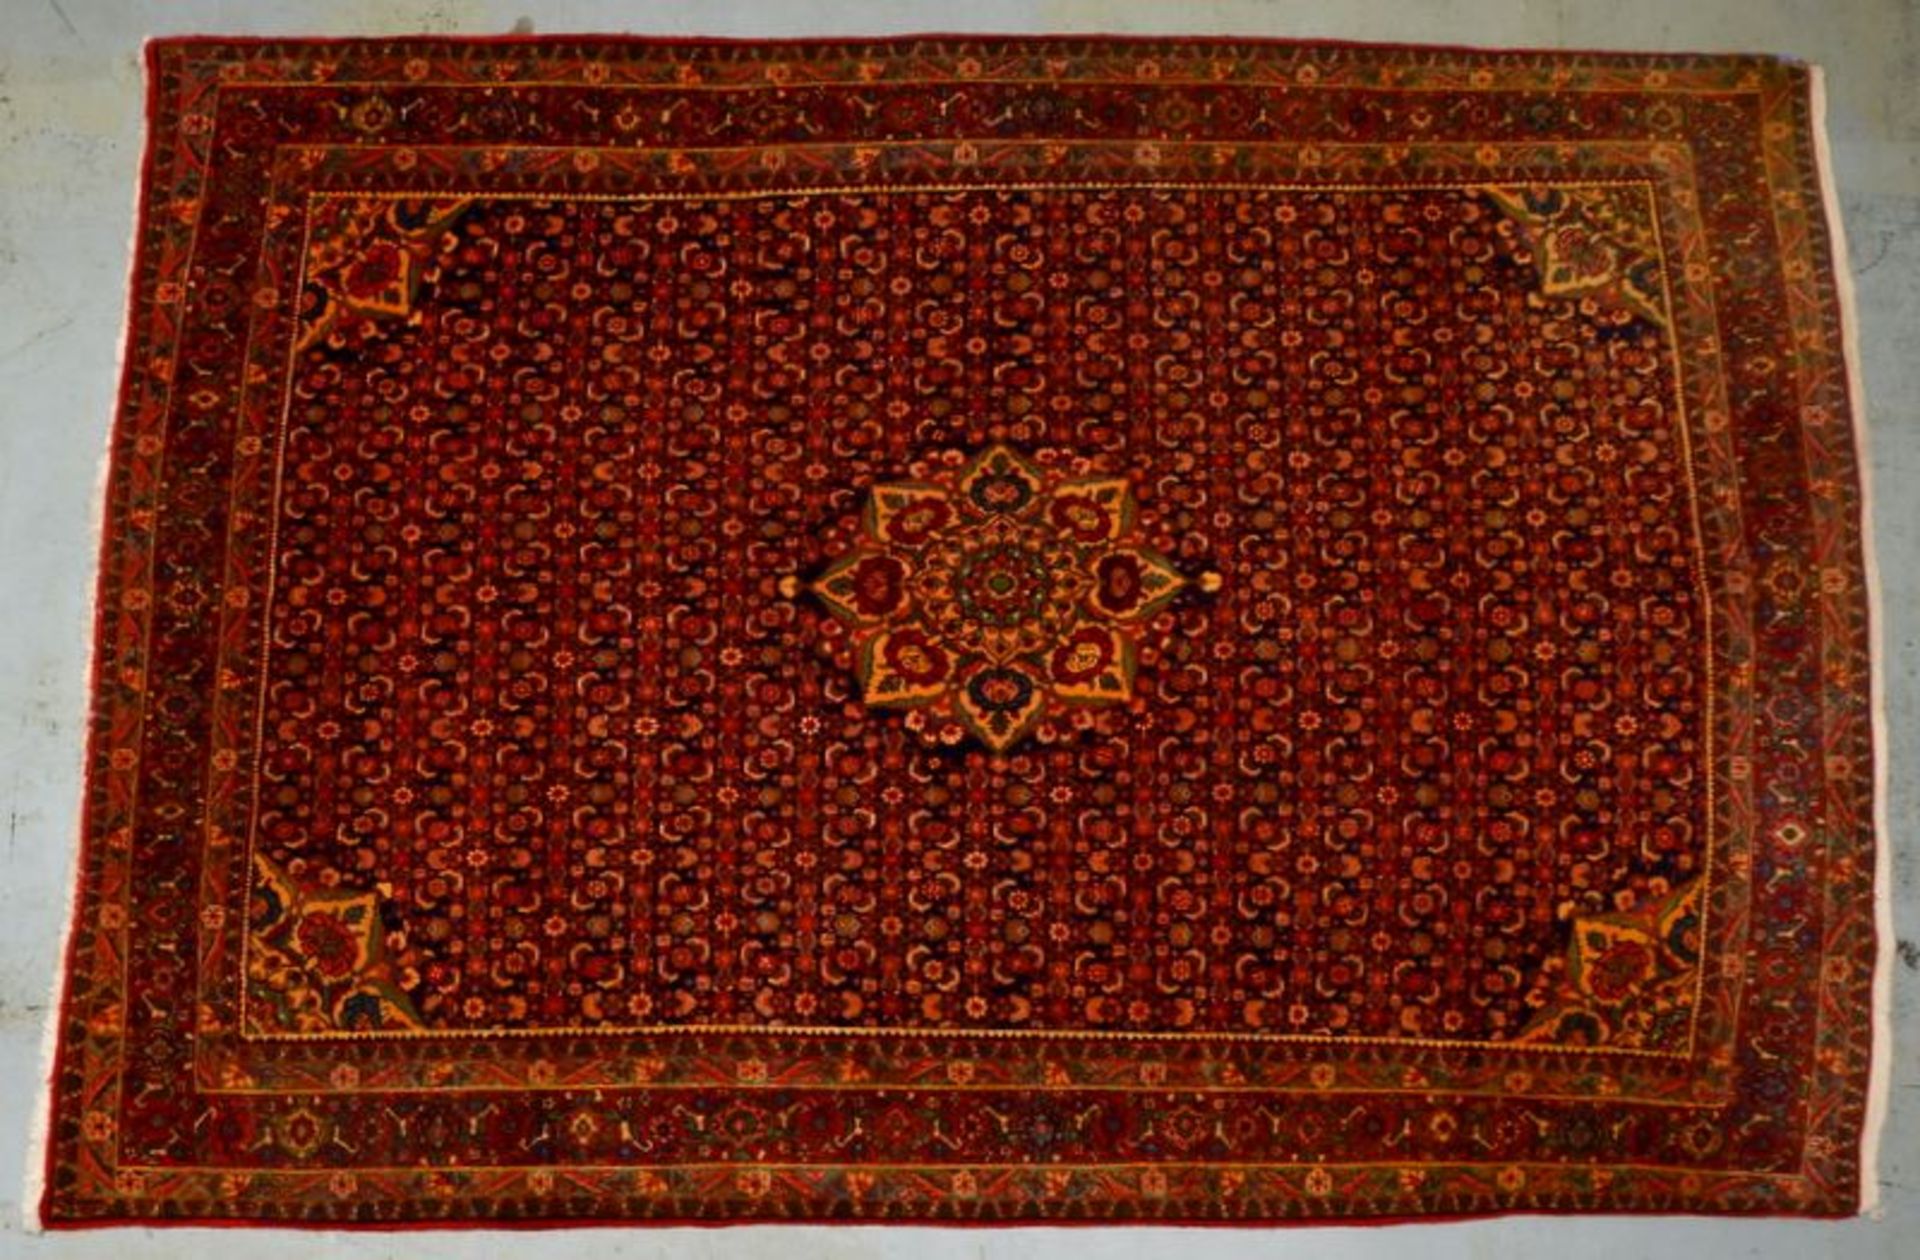 Bidjar, Herati-Muster, mit Rosenmedaillon, hochflorig, in gutem Zustand, wohnfertig (gechlort gewasc